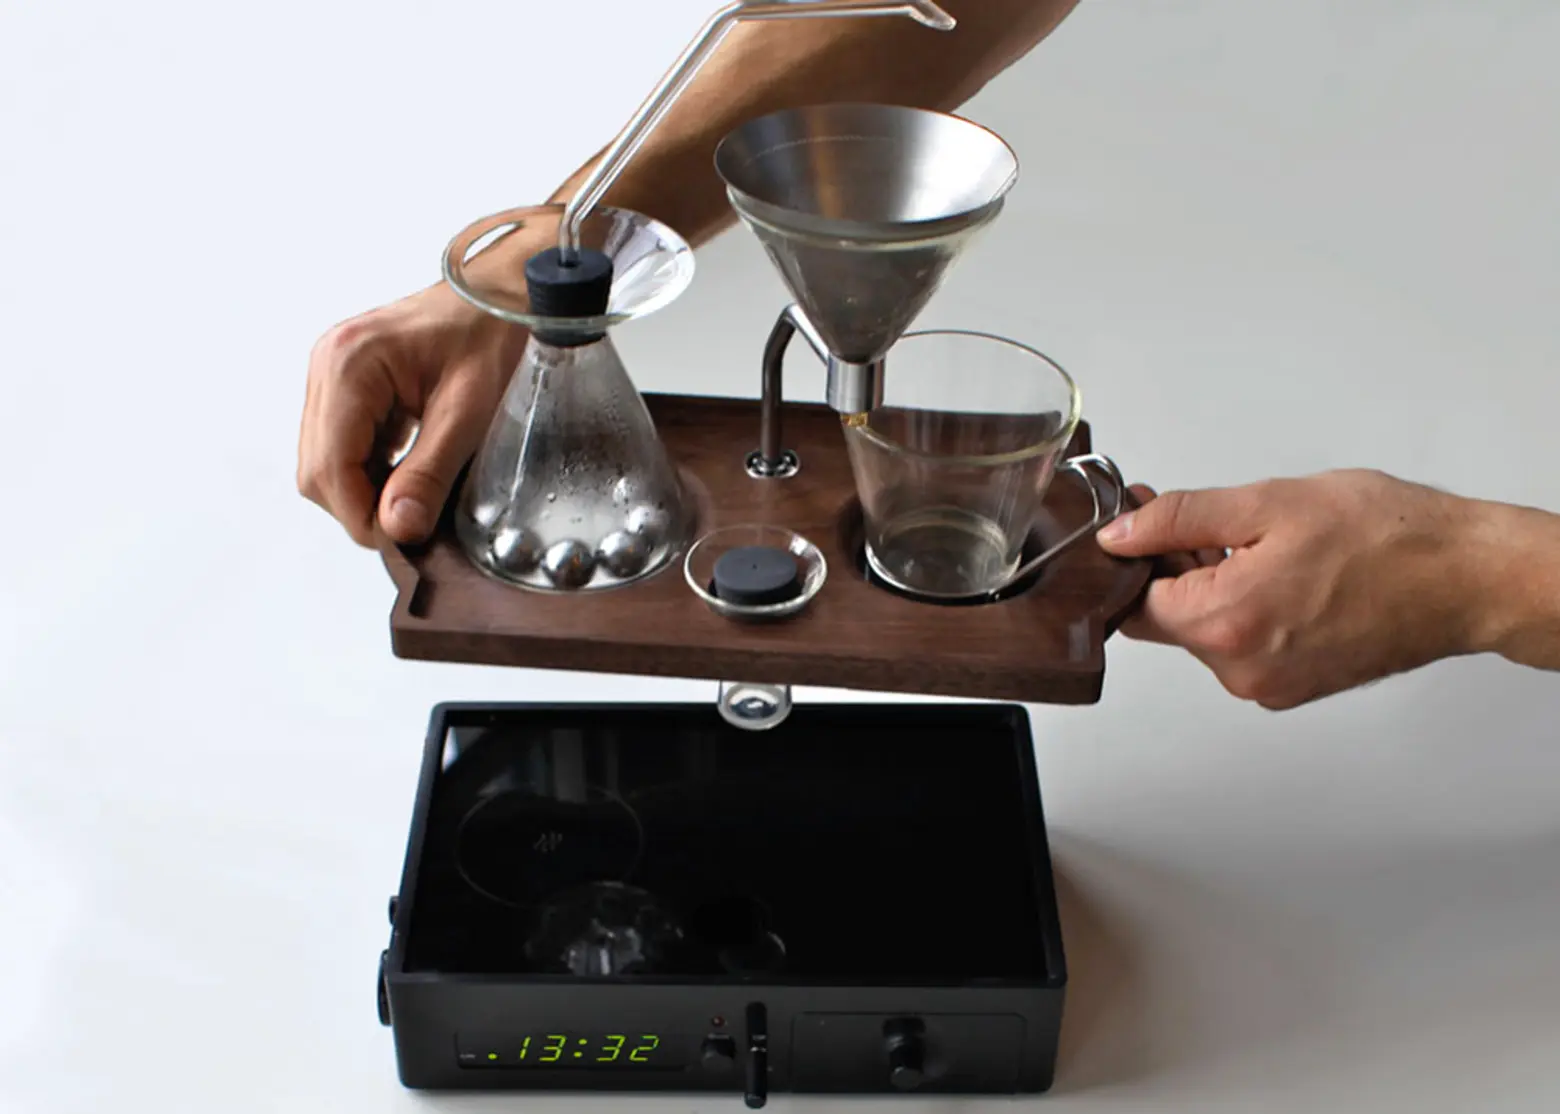 https://thumbs.6sqft.com/wp-content/uploads/2014/07/21035115/Joshua-Renouf-Hybrid-Coffee-Brewer-Alarm-Clock-The-Bariseur-2.jpg?w=1560&format=webp